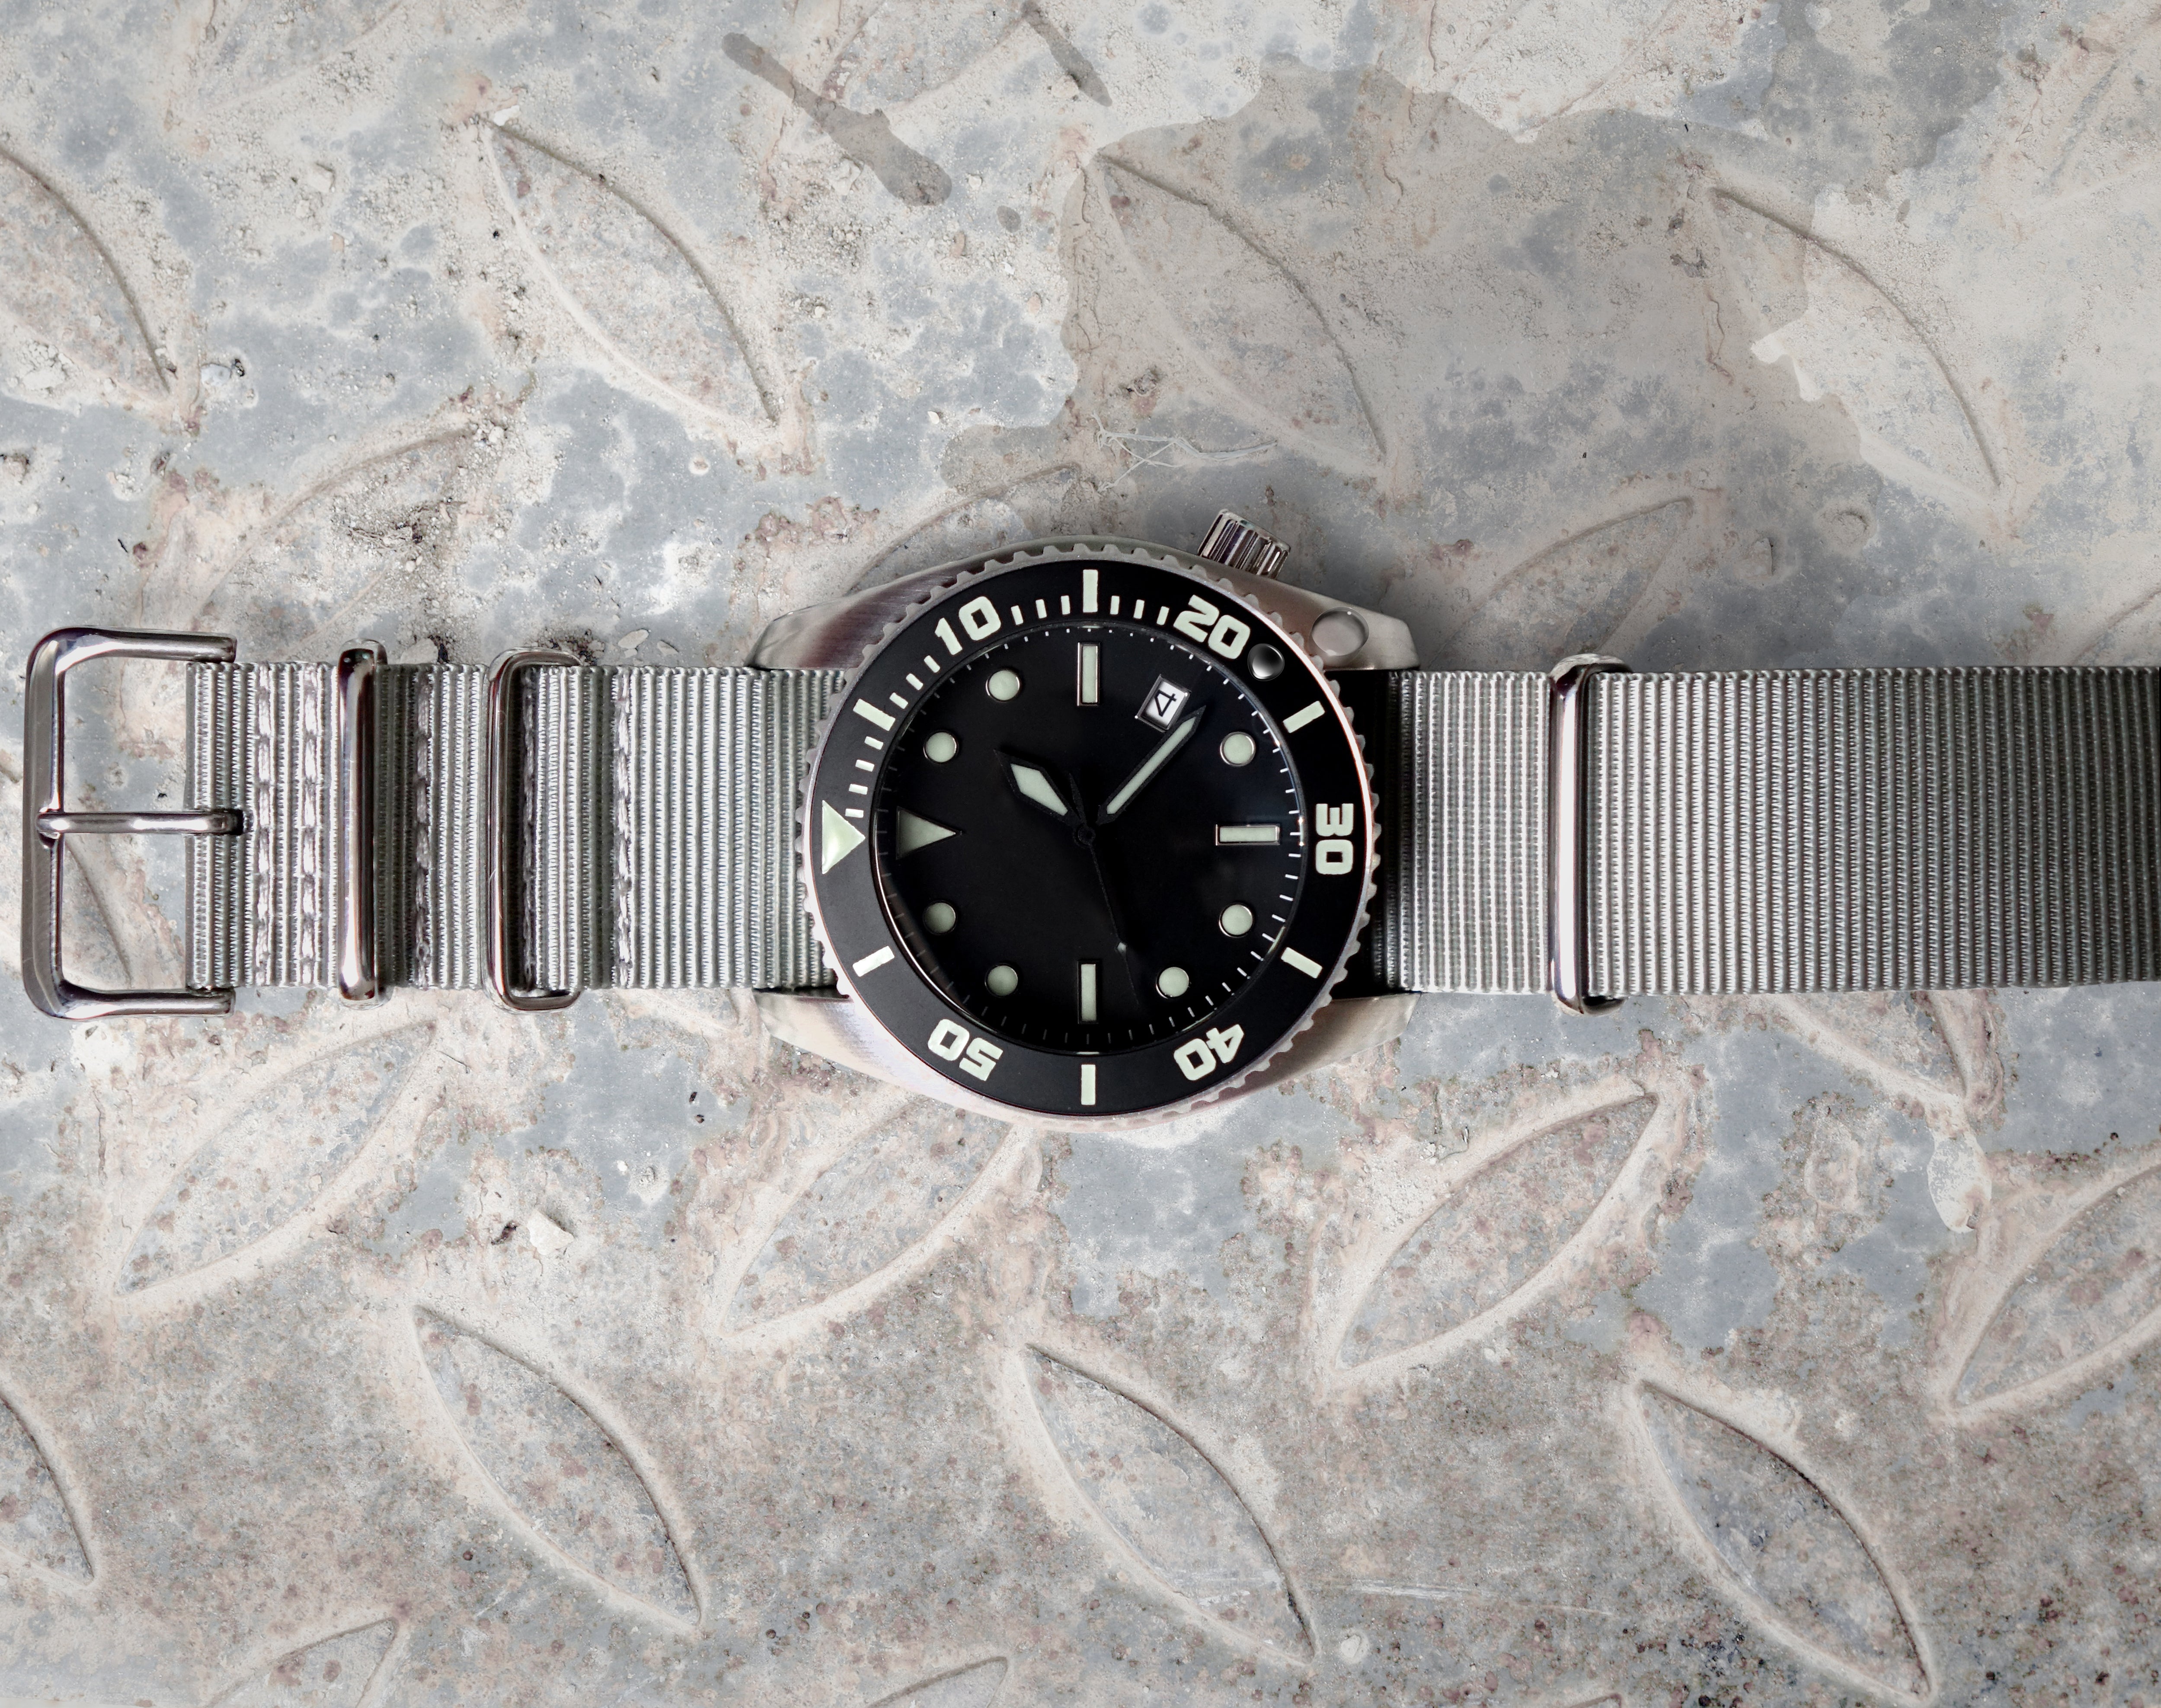 Enoksen - Blog Post - History of the Diver's Watch - Enoksen Deep Dive image